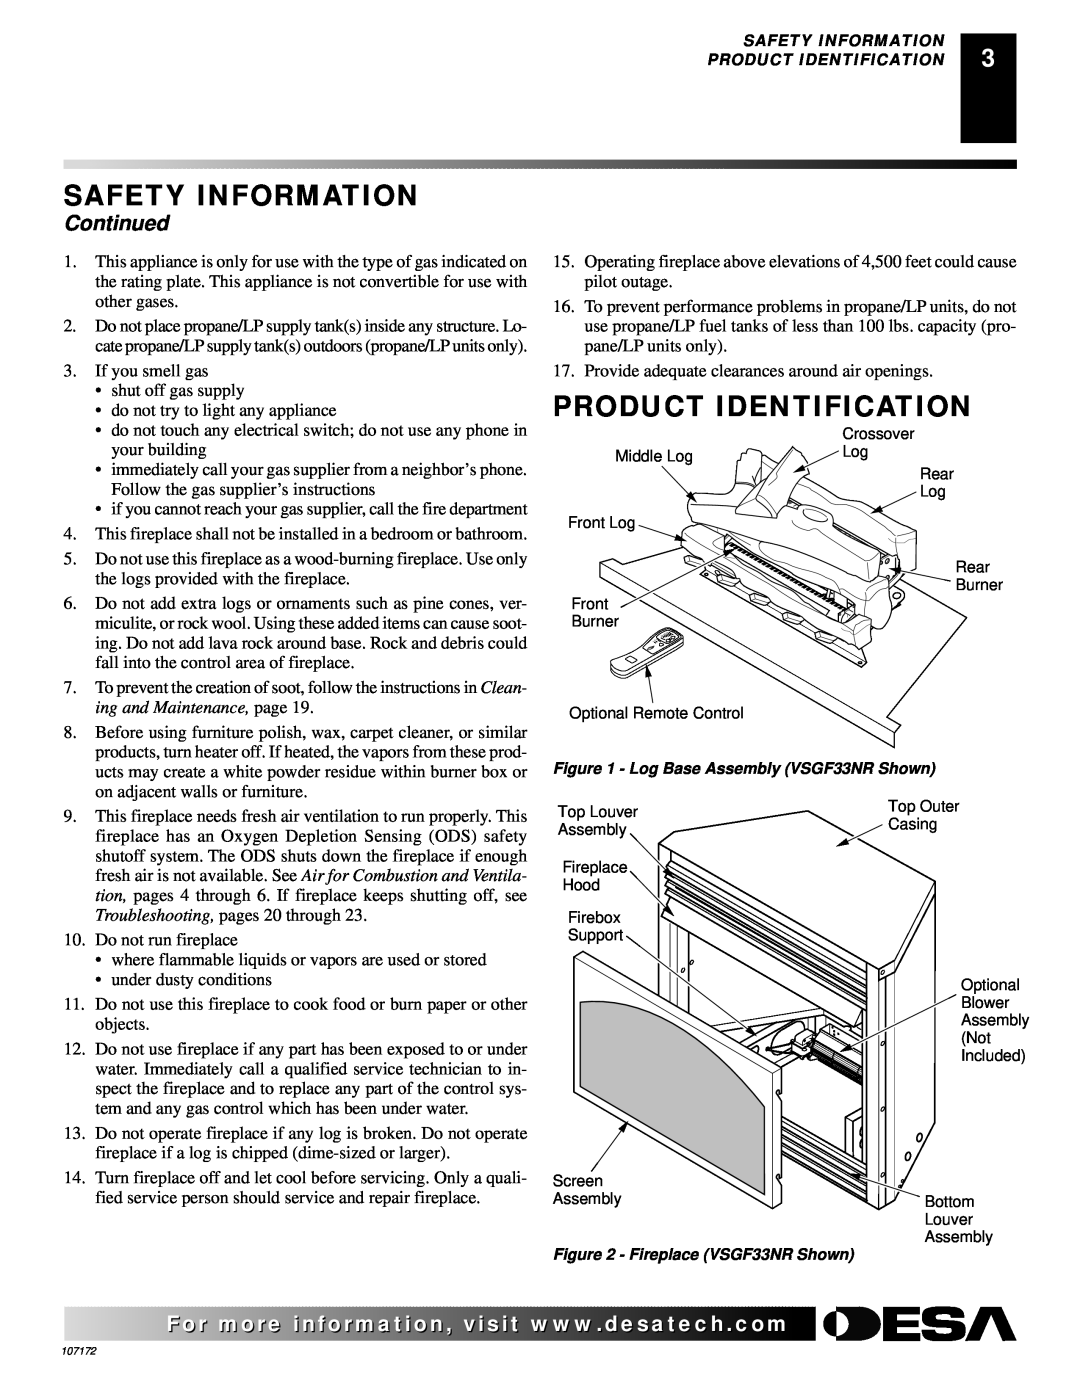 Desa VSGF33PR, EFS33NR installation manual Product Identification, Continued, Safety Information 